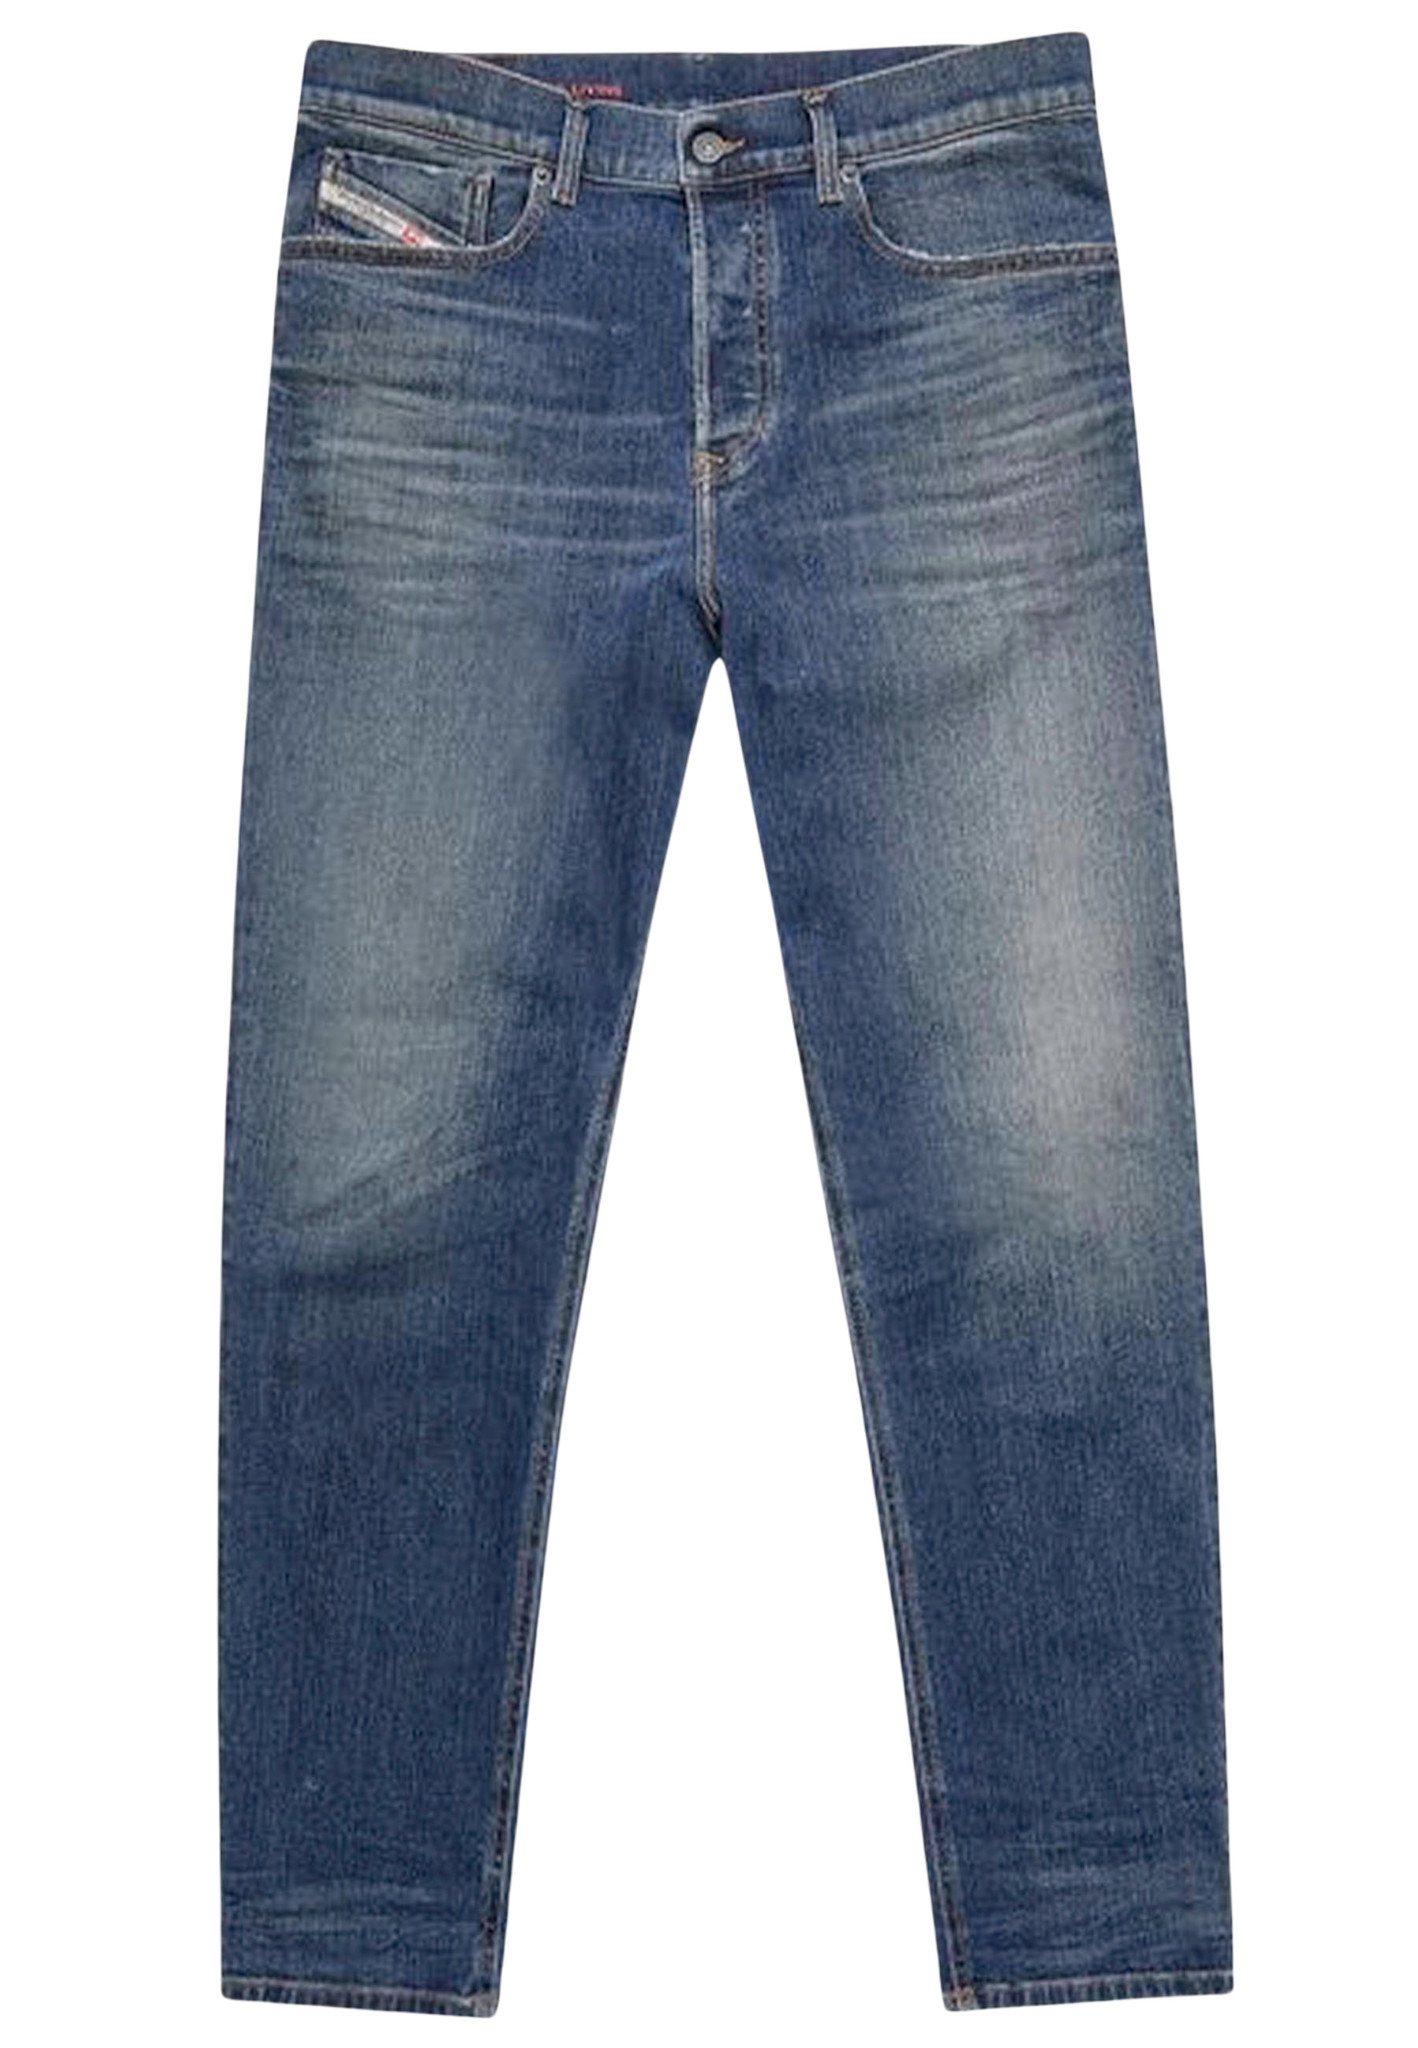 Diesel A03594 jeans blauw Heren maat 31/32